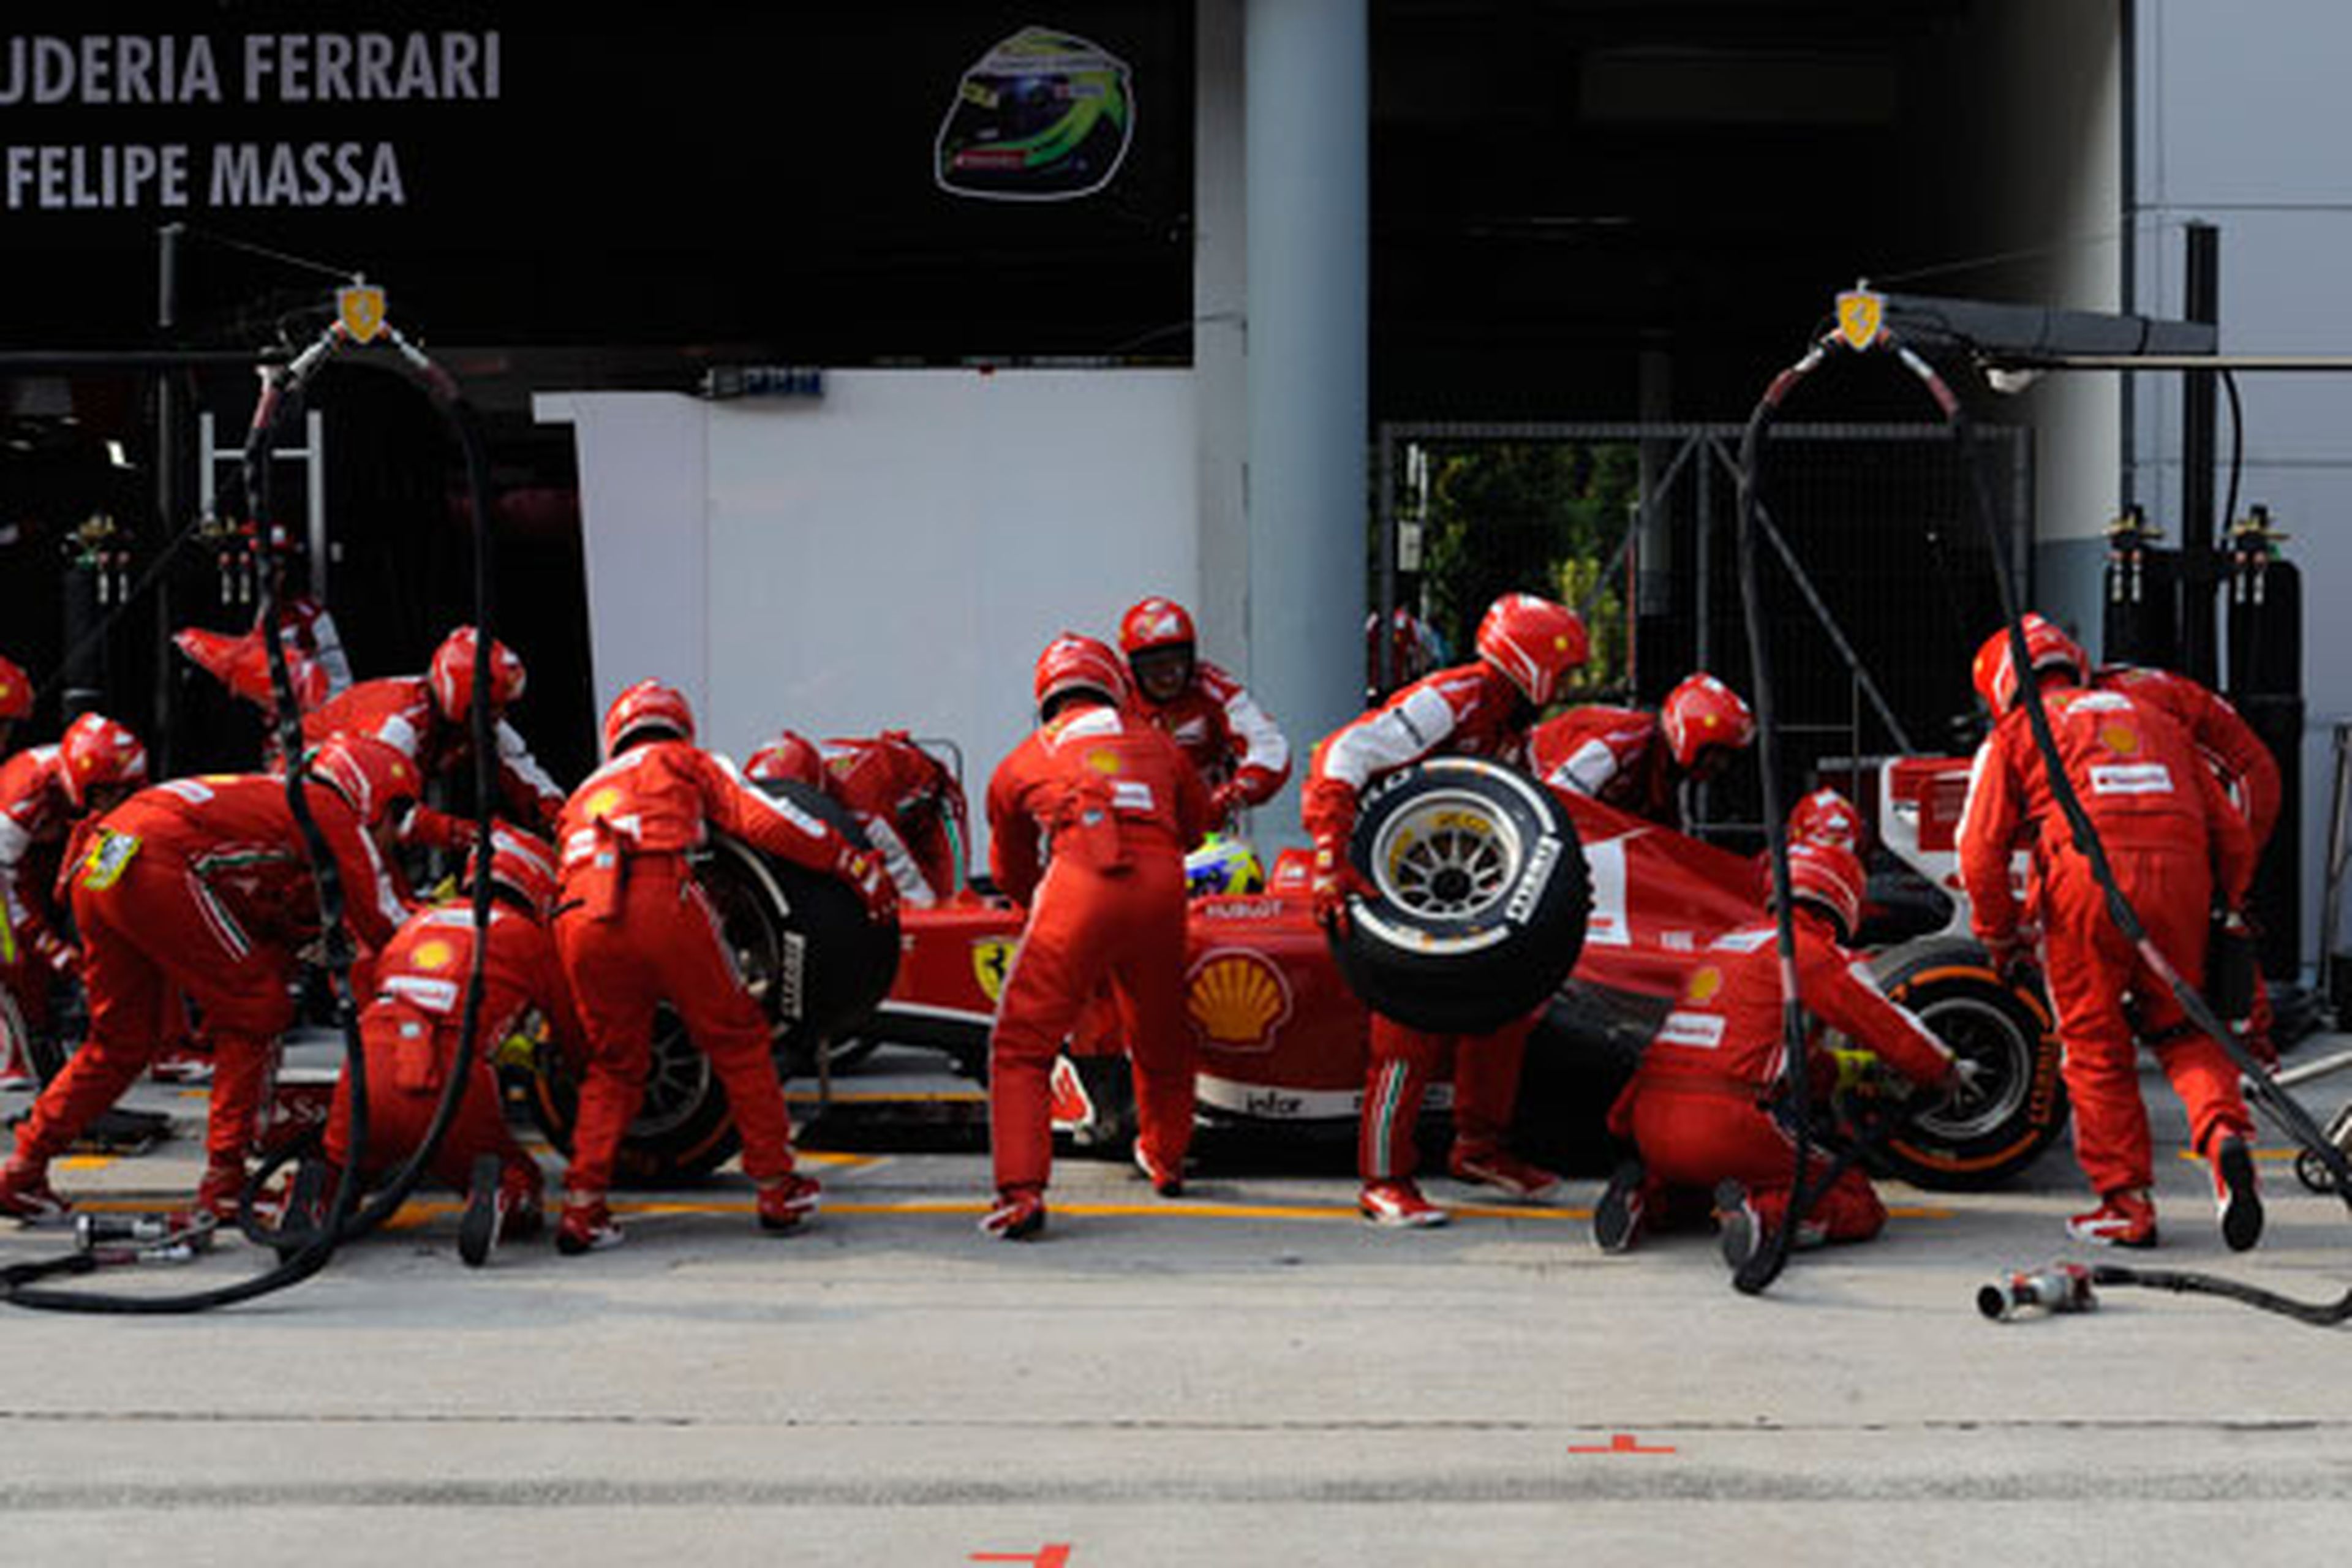 Ferrari - box - neumaticos - Malasia - 2013